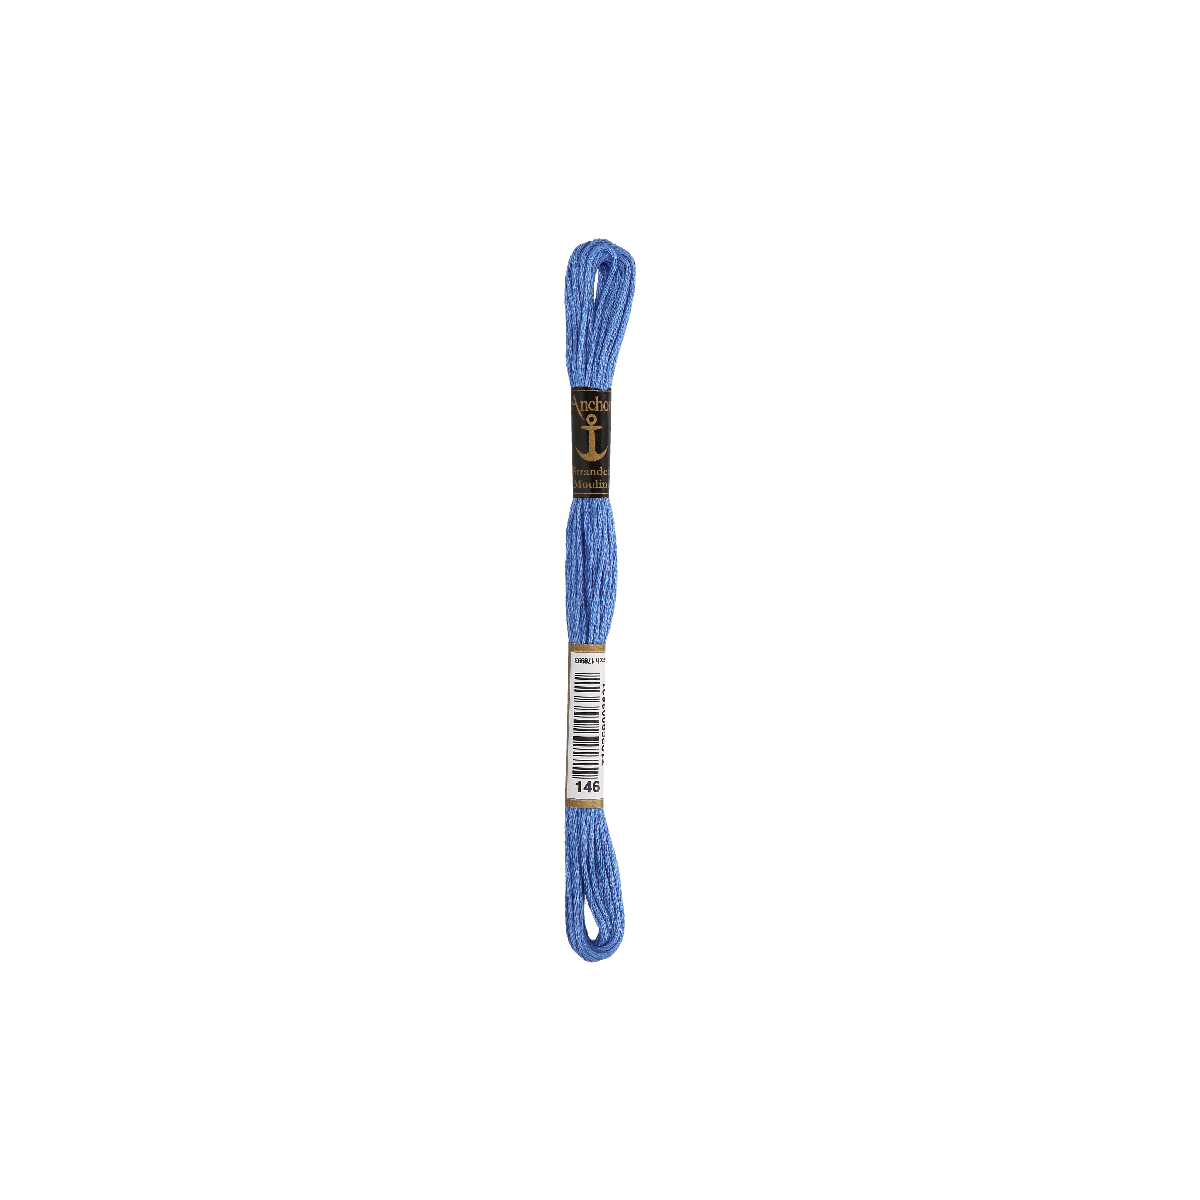 Anchor Torsade 8m, bleu, coton, couleur 146, 6 fils